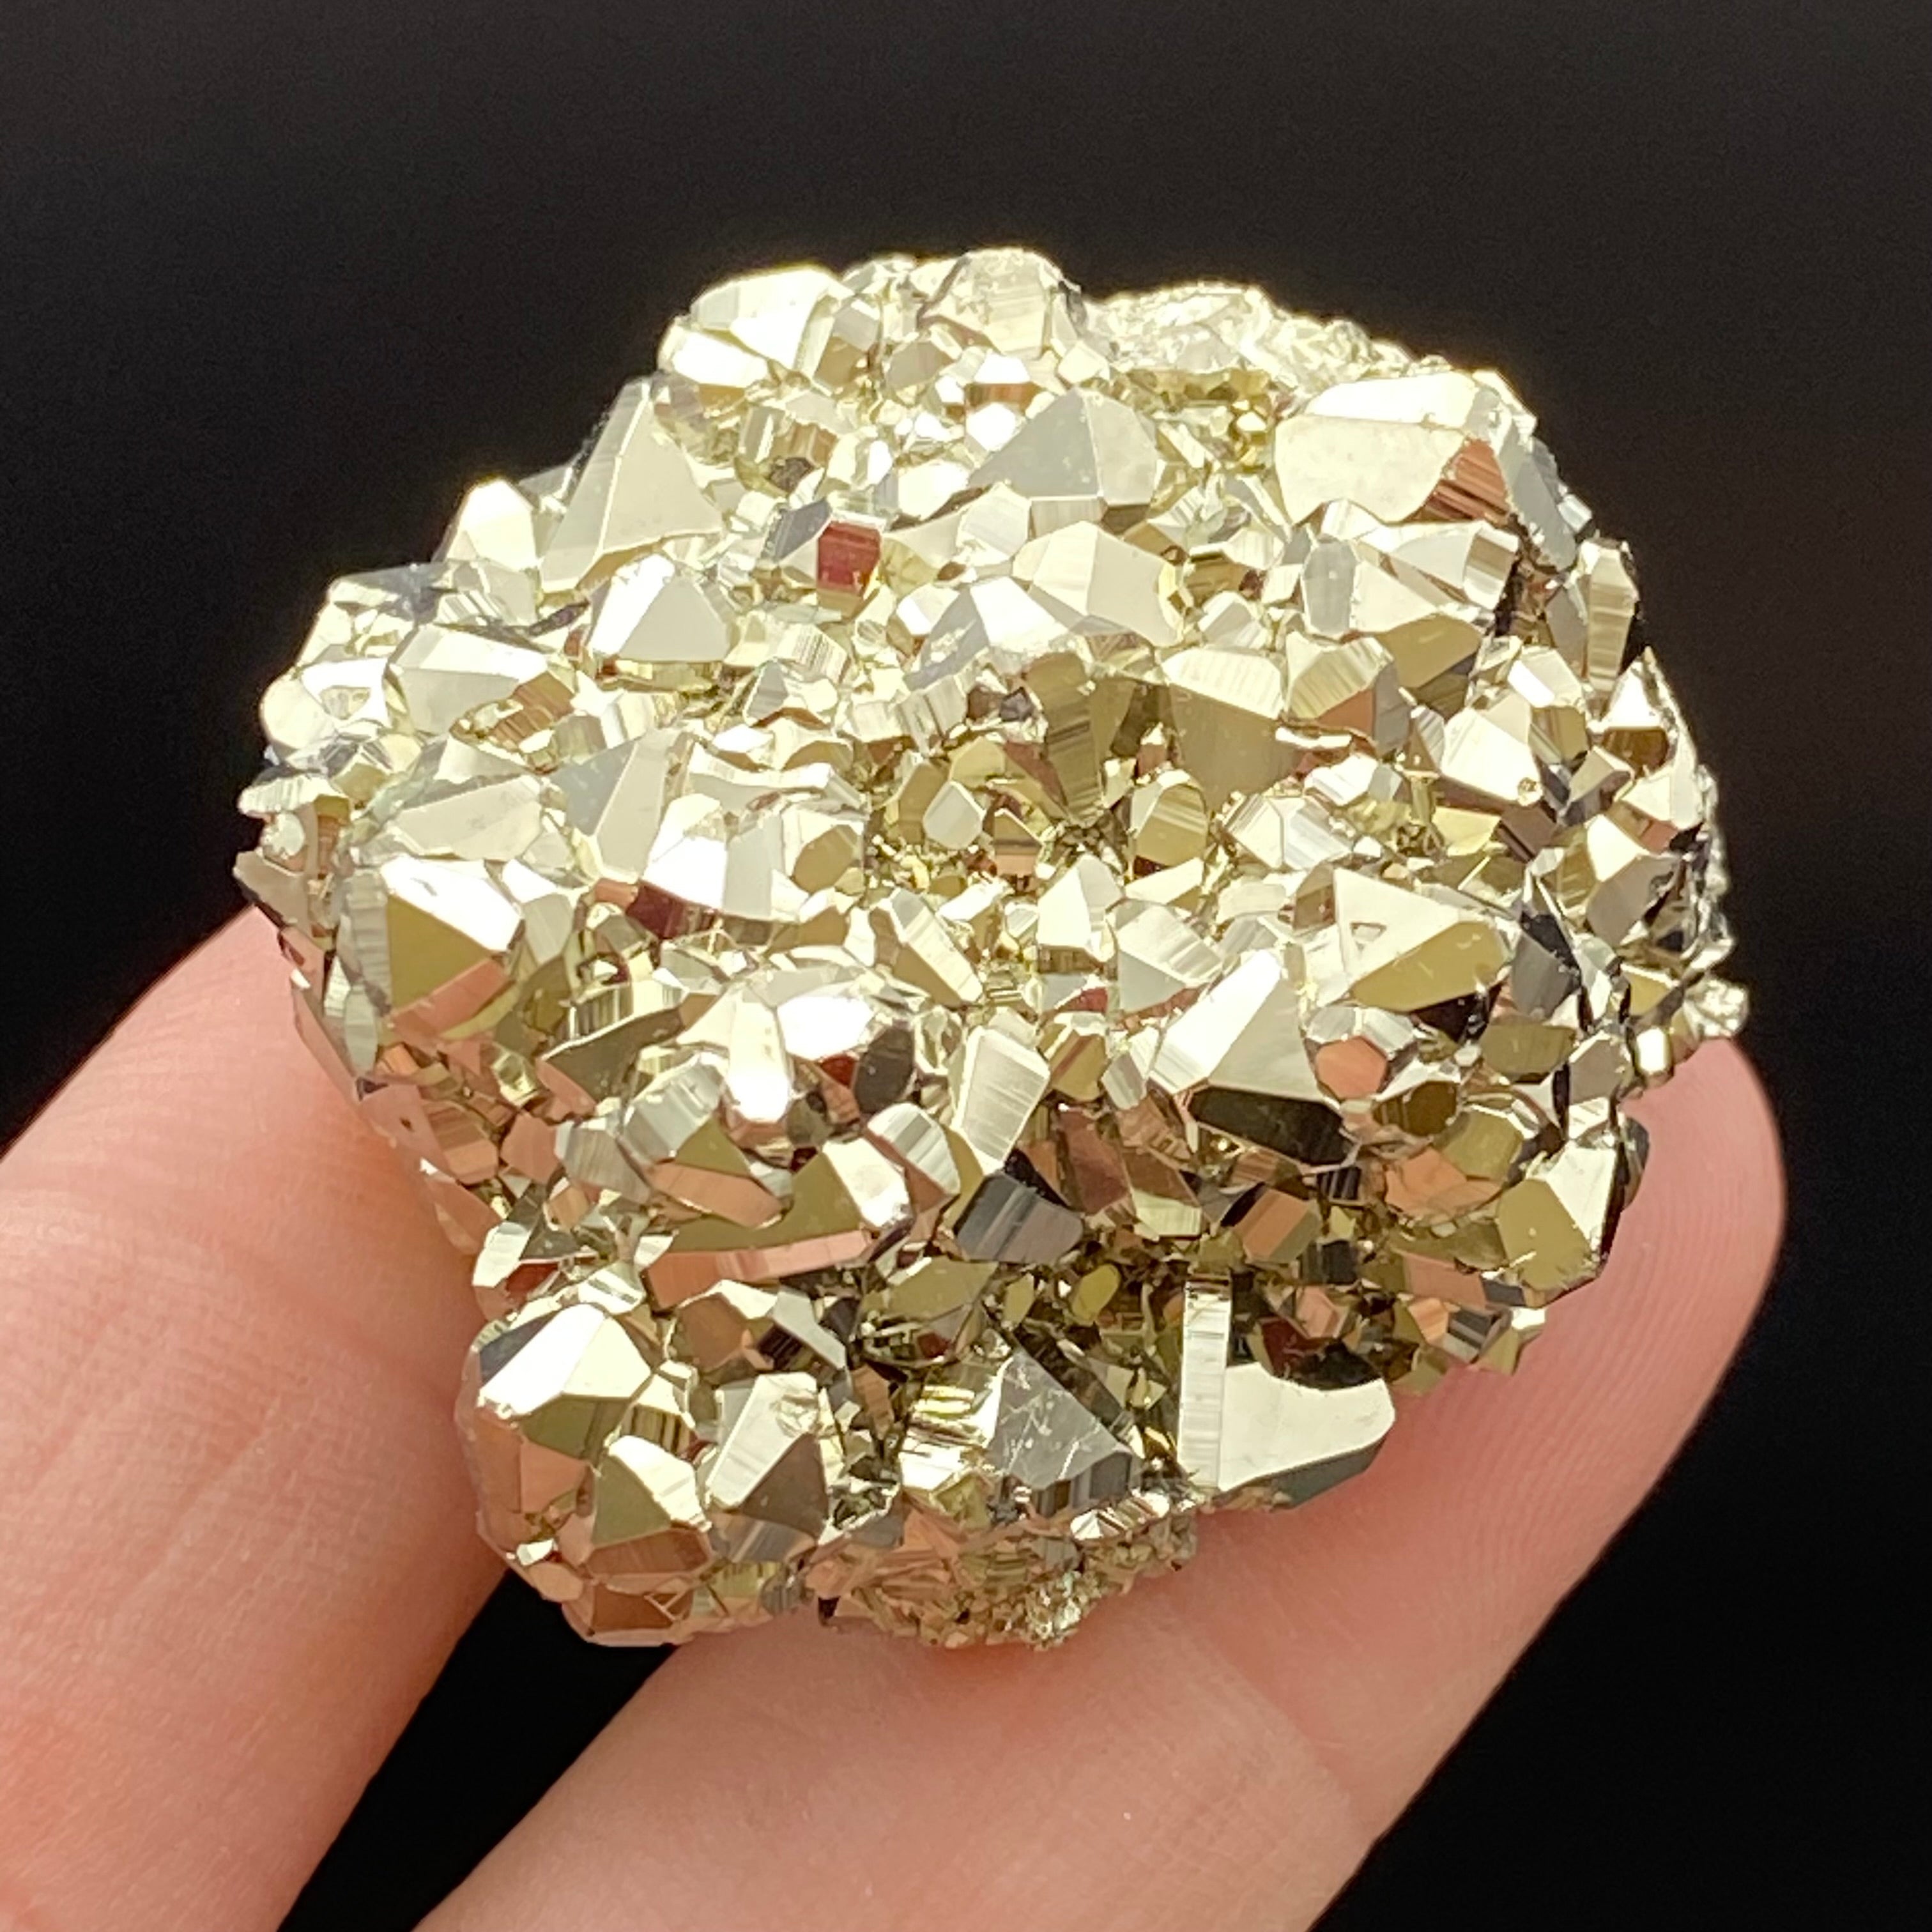 Peruvian Pyrite Crystal - 013